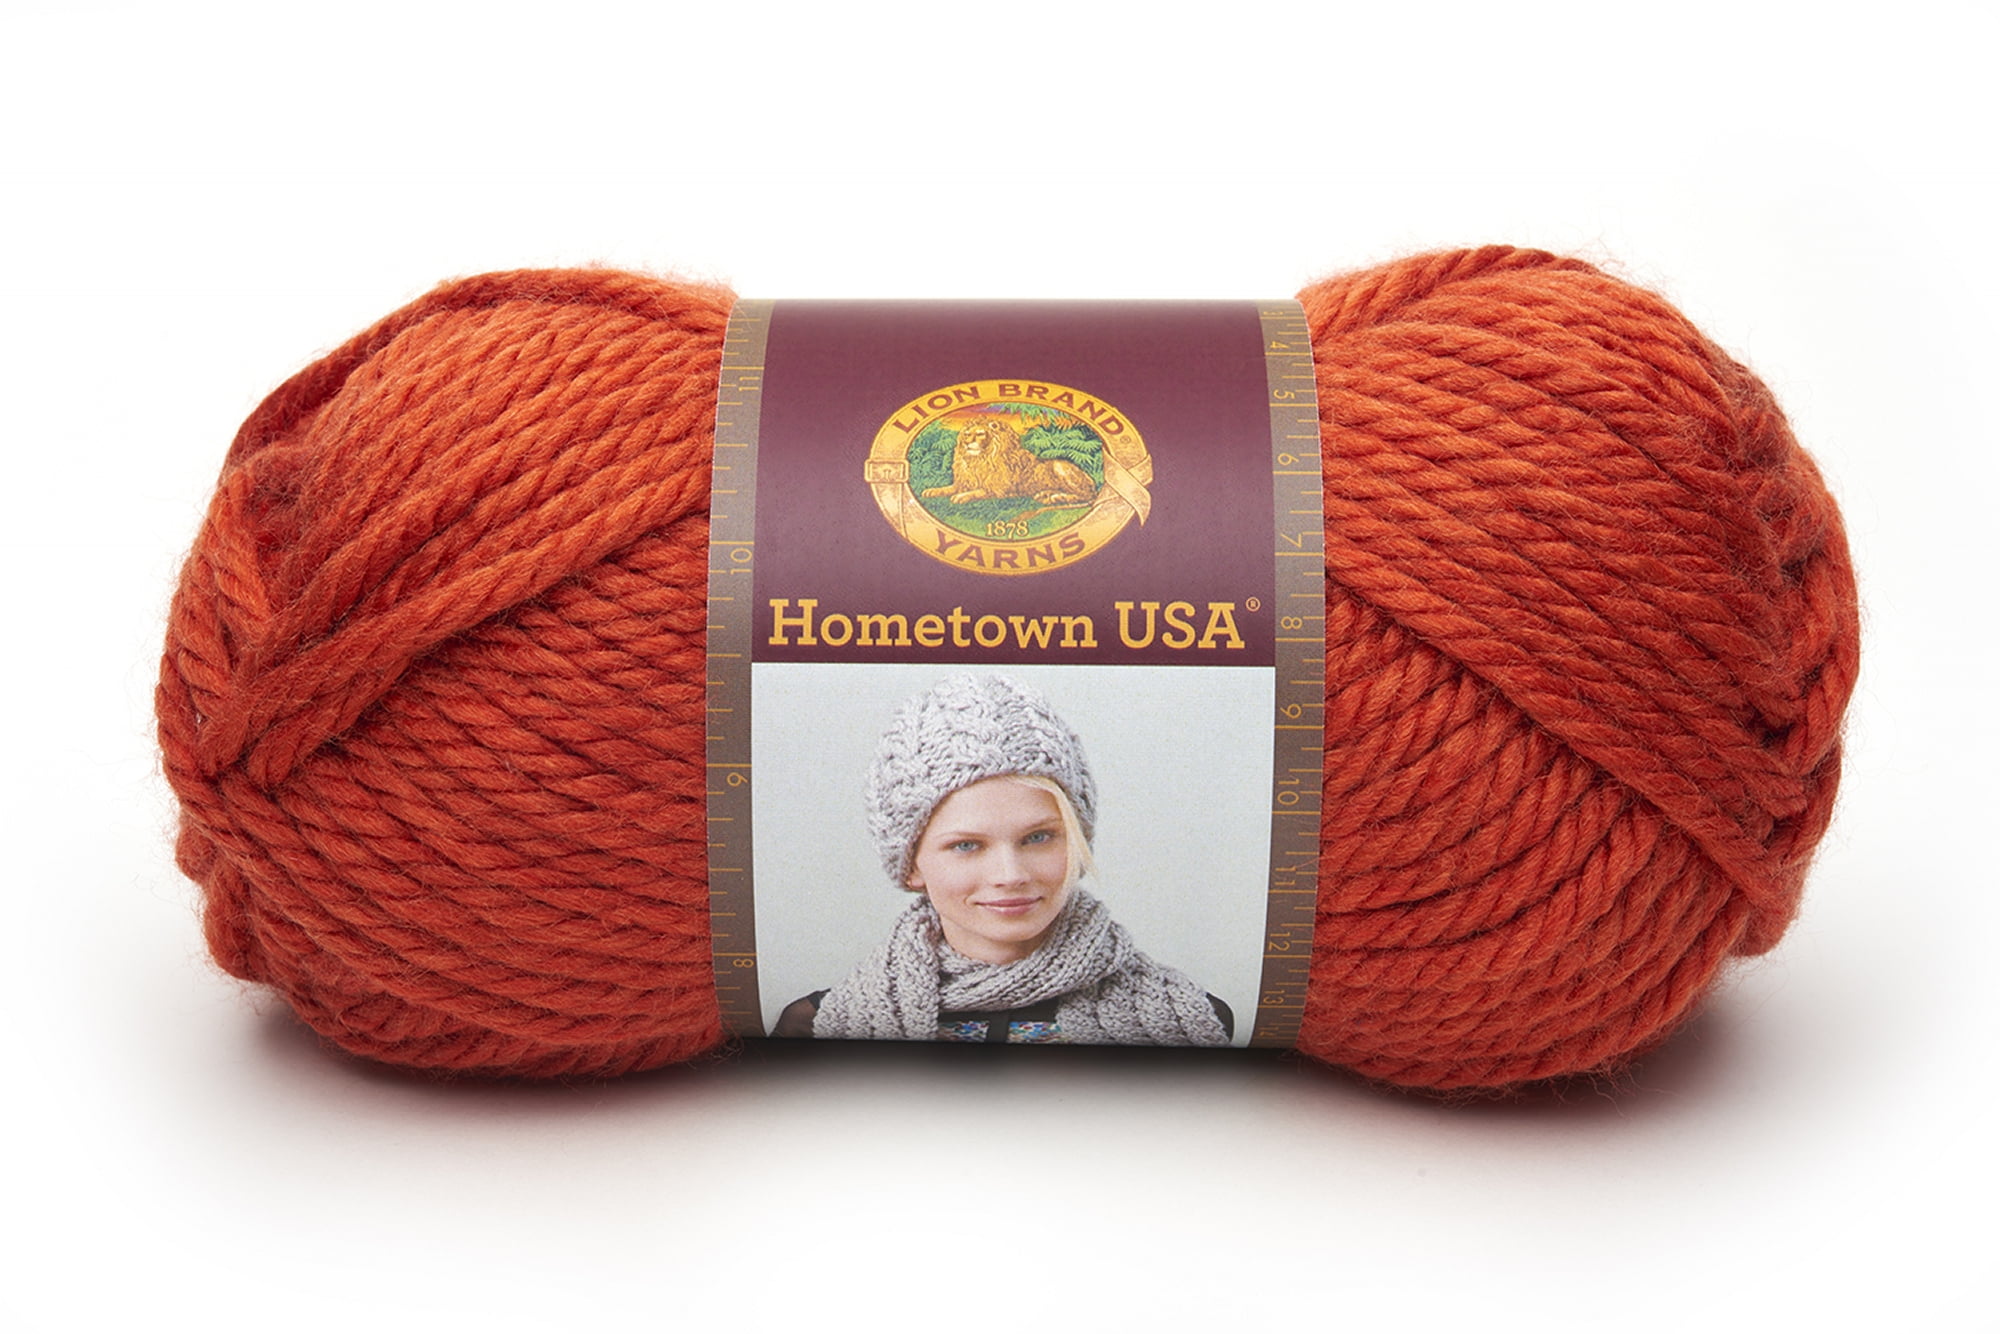 Lion Brand Yarns Hometown USA Yarn - Brick Red Orange, 1 ct - Harris Teeter